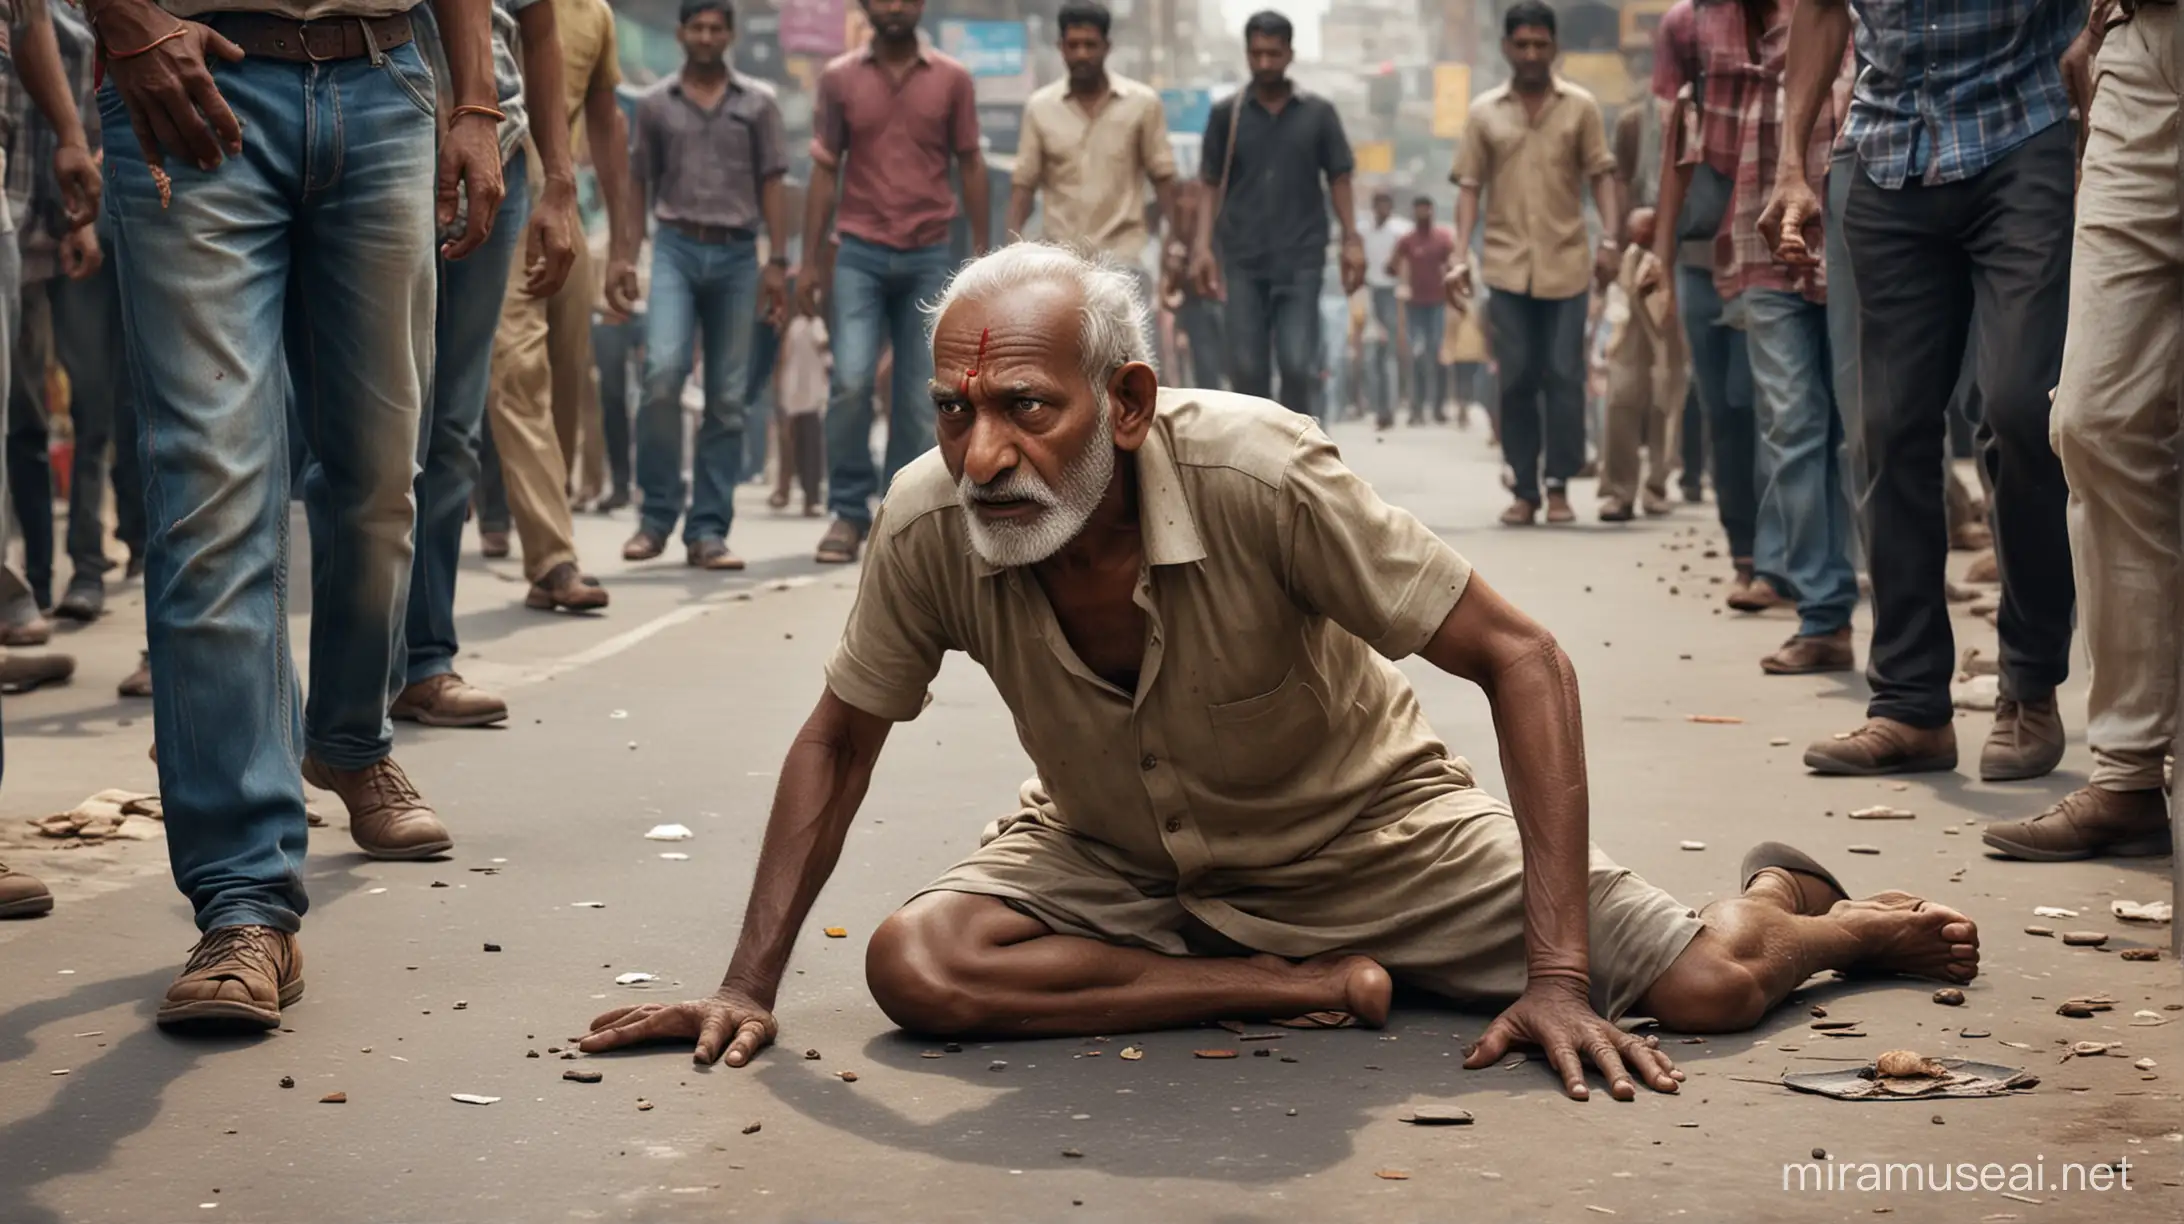 Indian Crowd Assaulting Elderly Man in Realistic HyperDetailed Scene